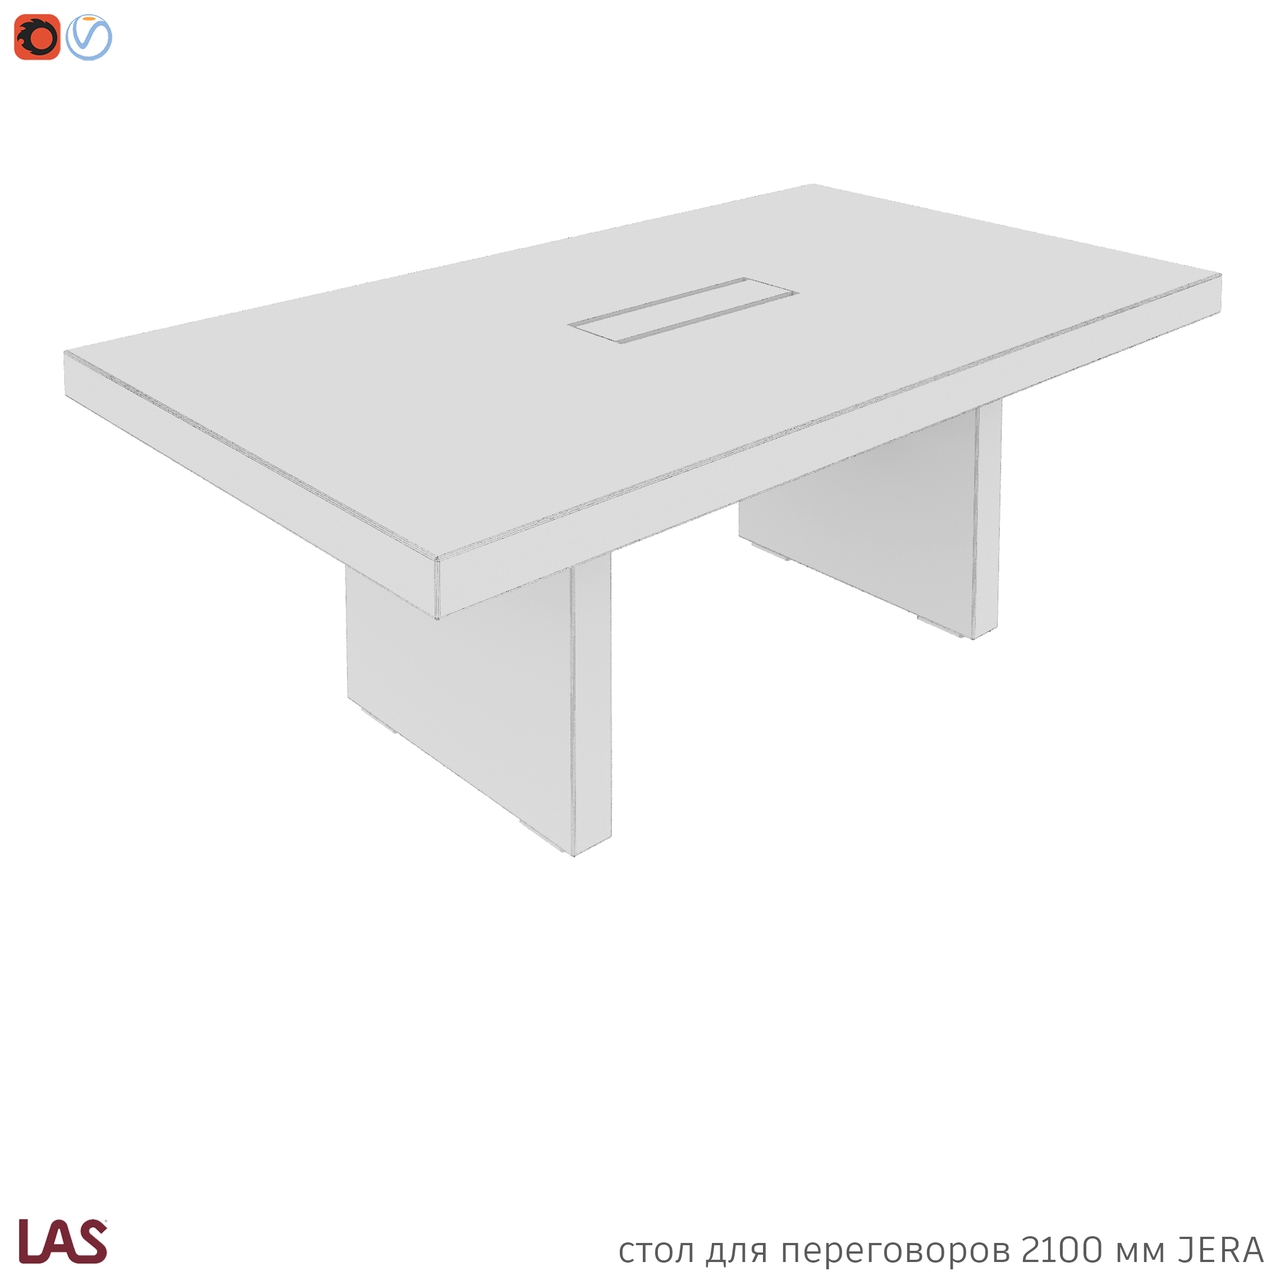 Превью G 3D-модели стола для переговоров LAS Jera 159913